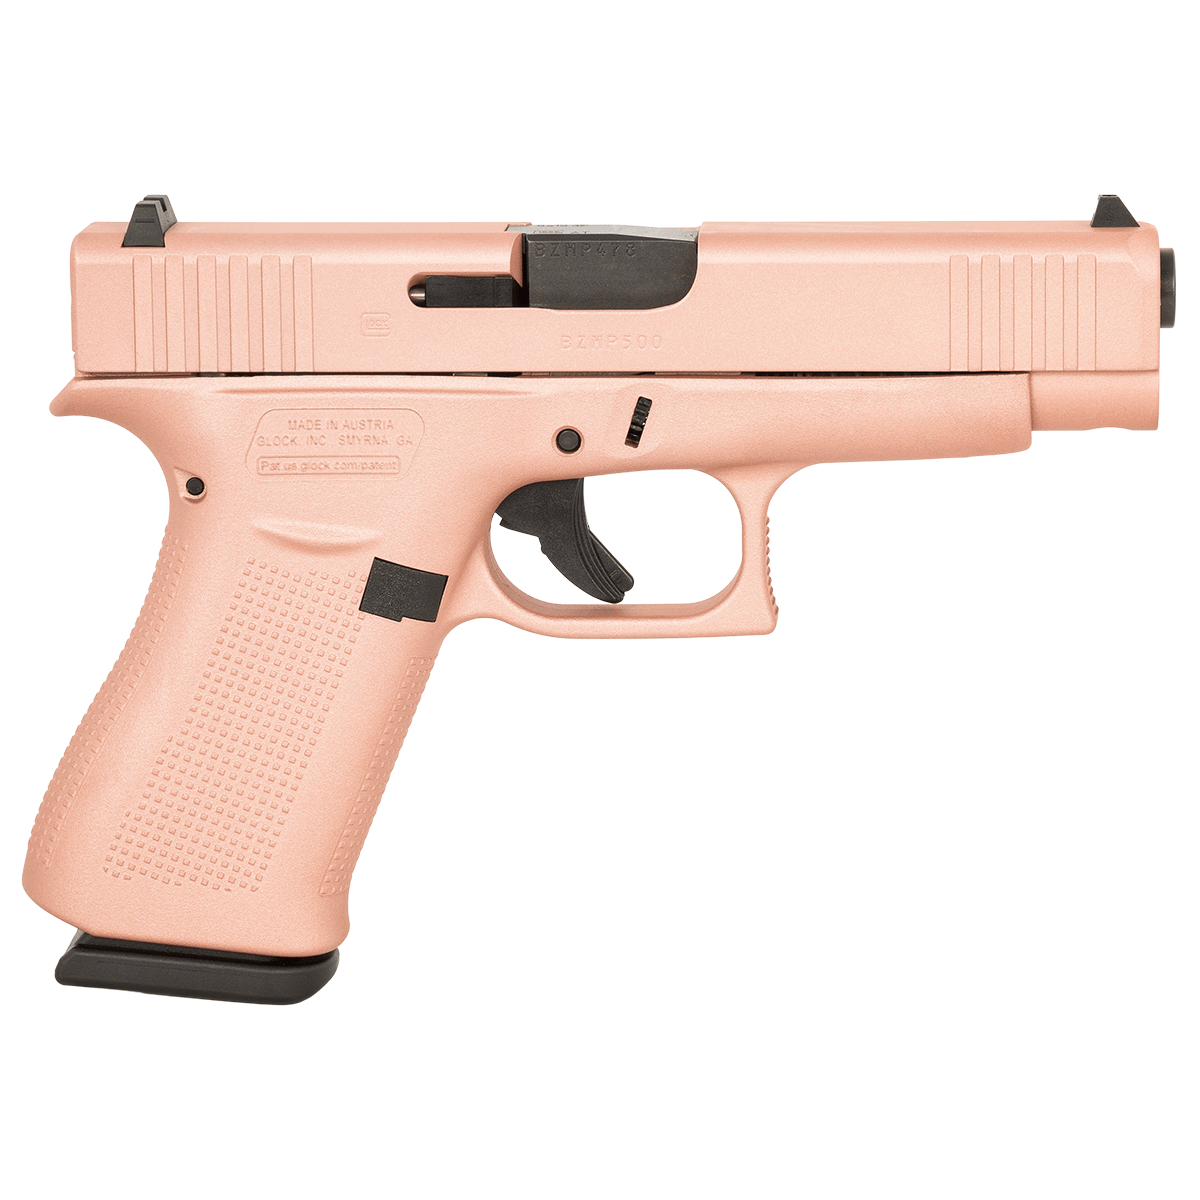 Glock G48 Compact Slim 9mm Semi-Automatic Pistol Rose Gold